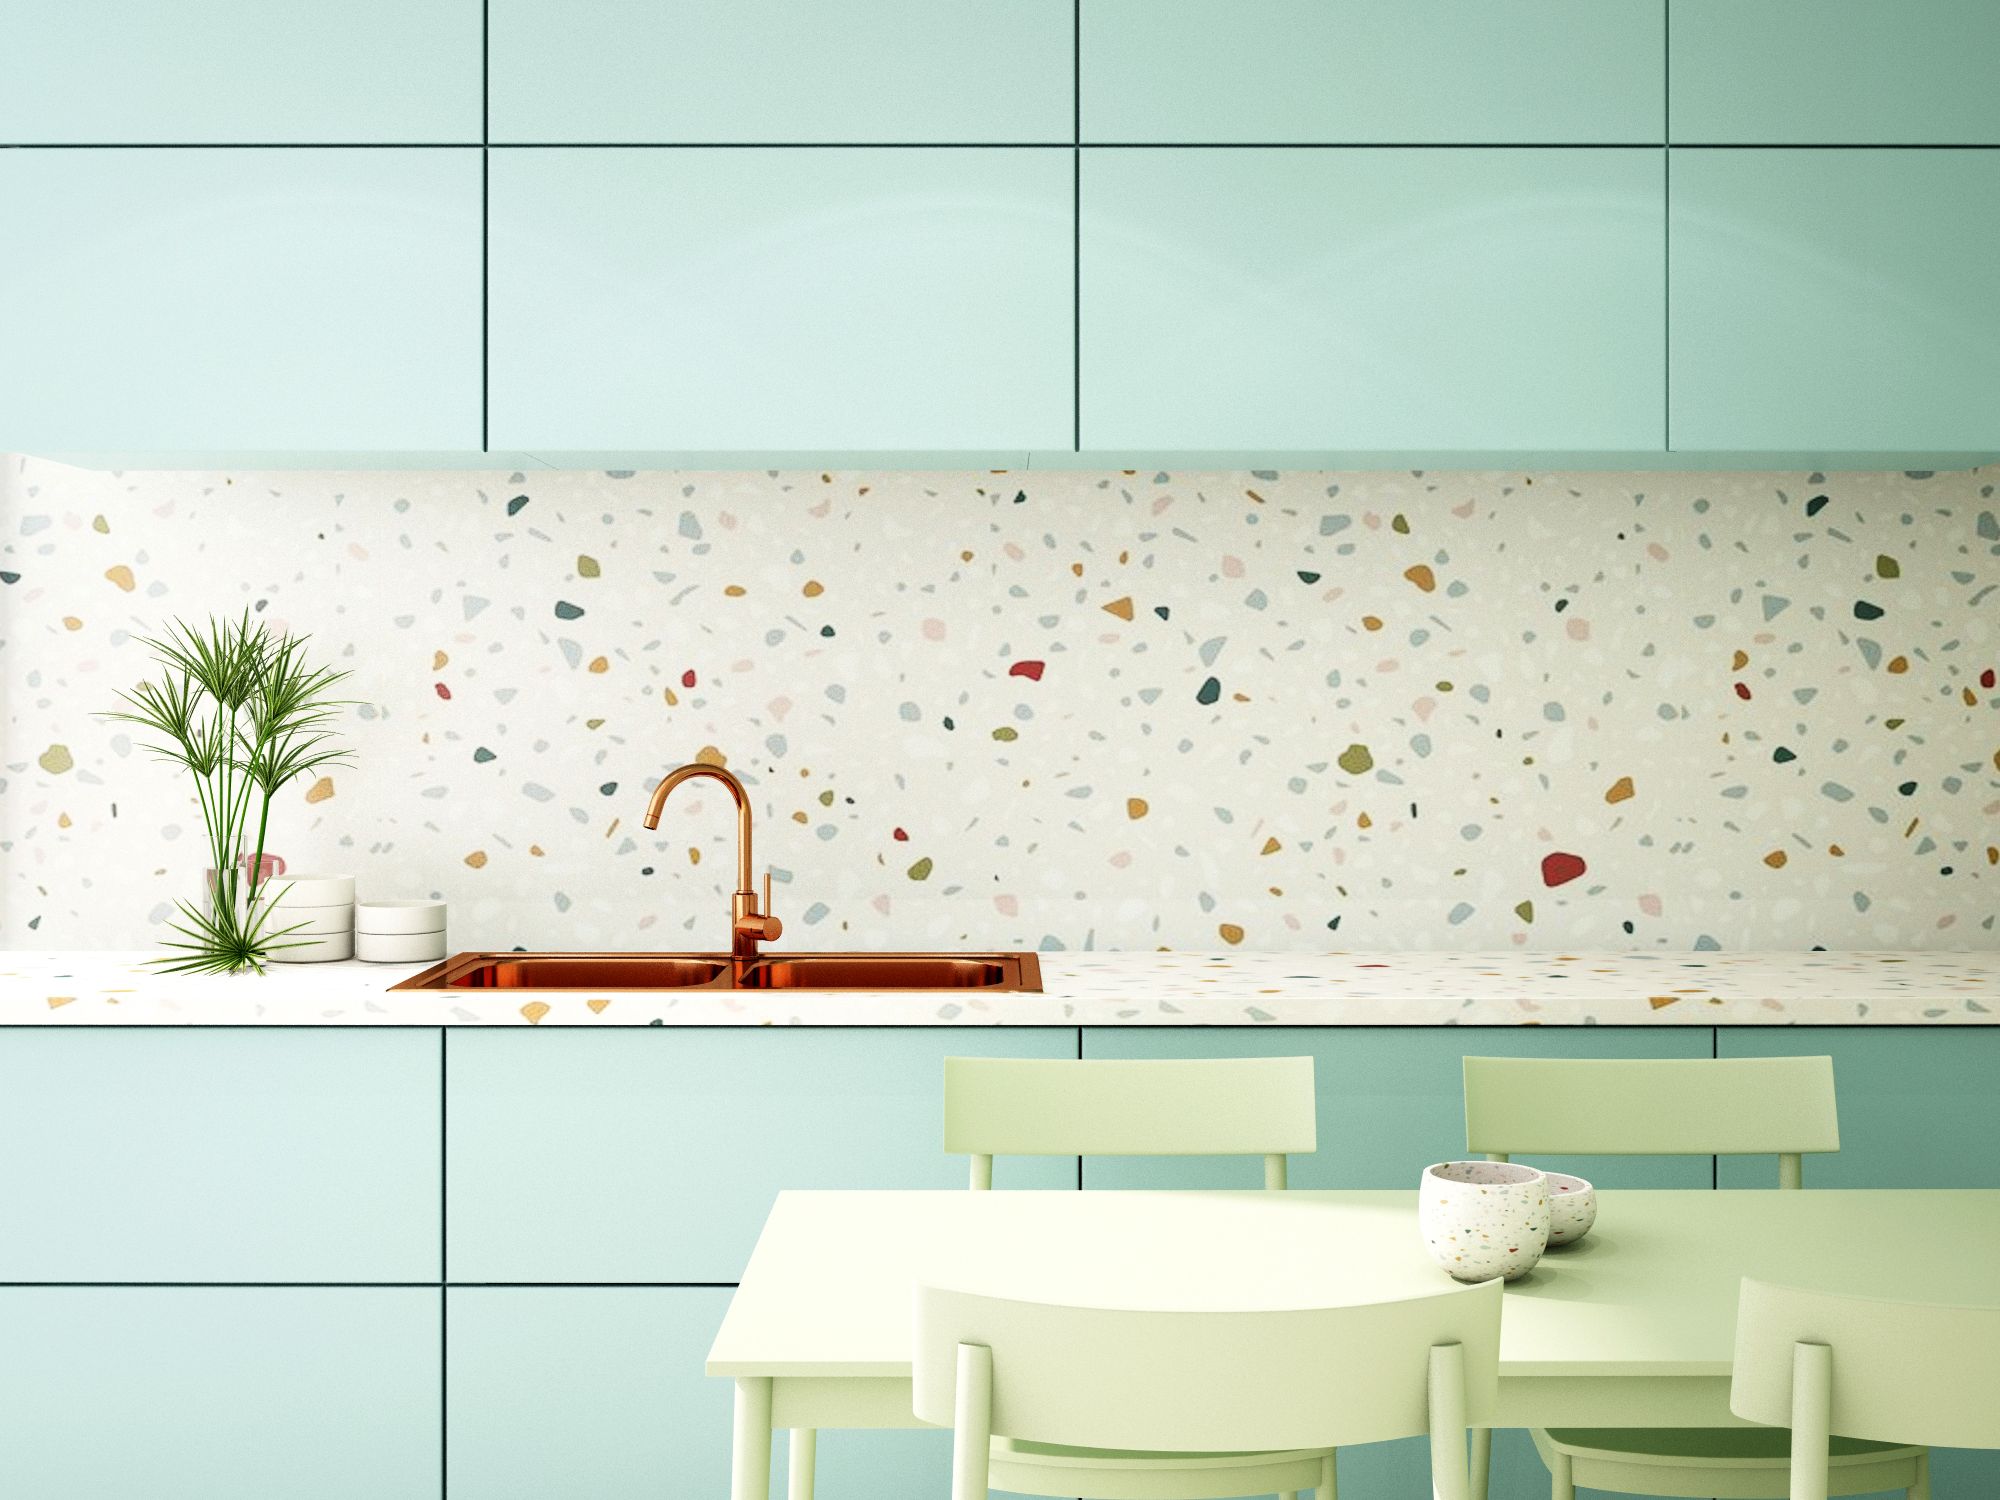 Intersting kitchen wall decor - a pattern